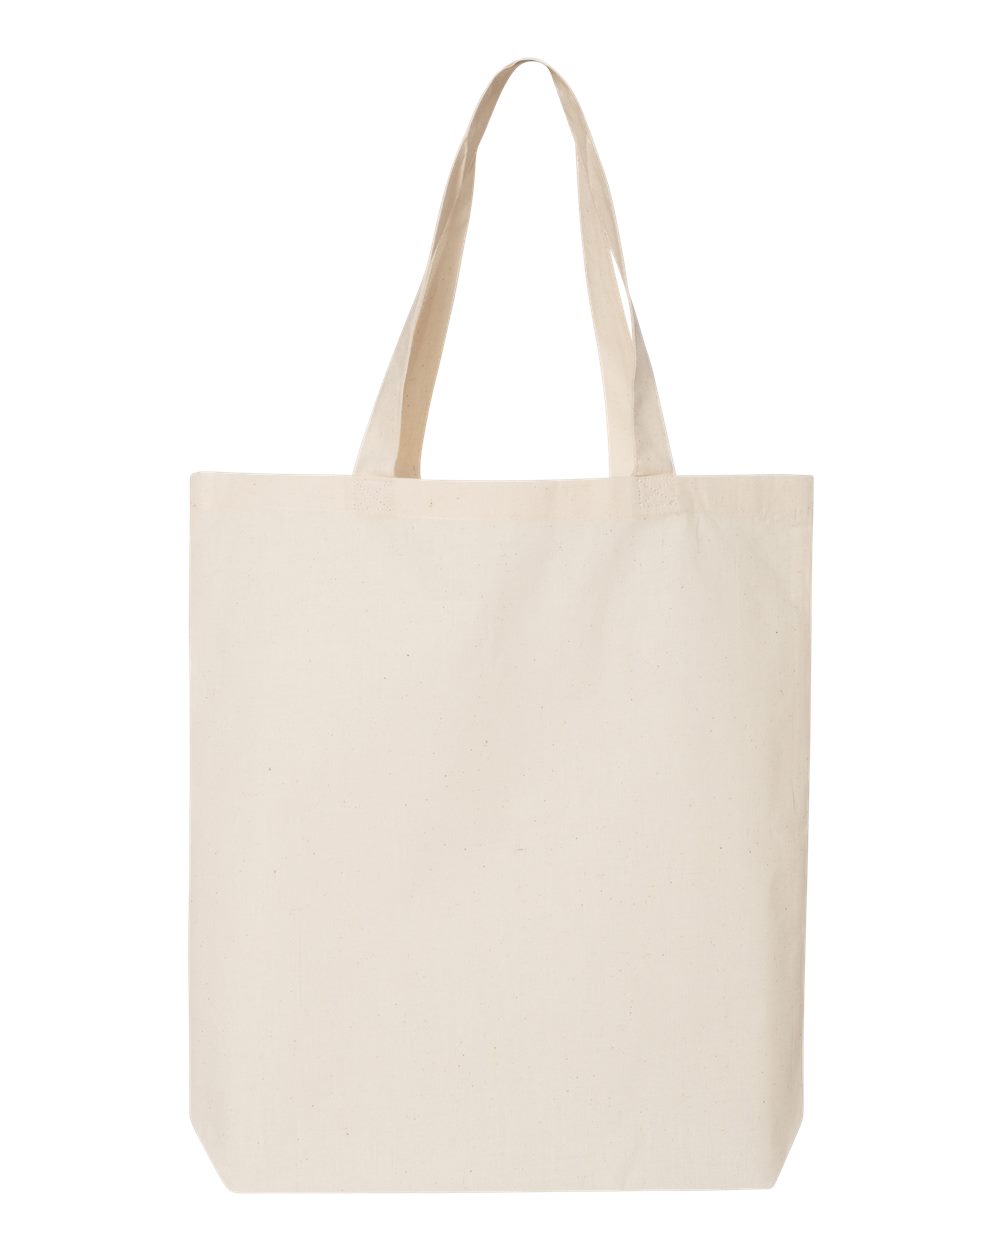 6oz Natural Tote Bag At Wholesale Pricing | Cotton Creations